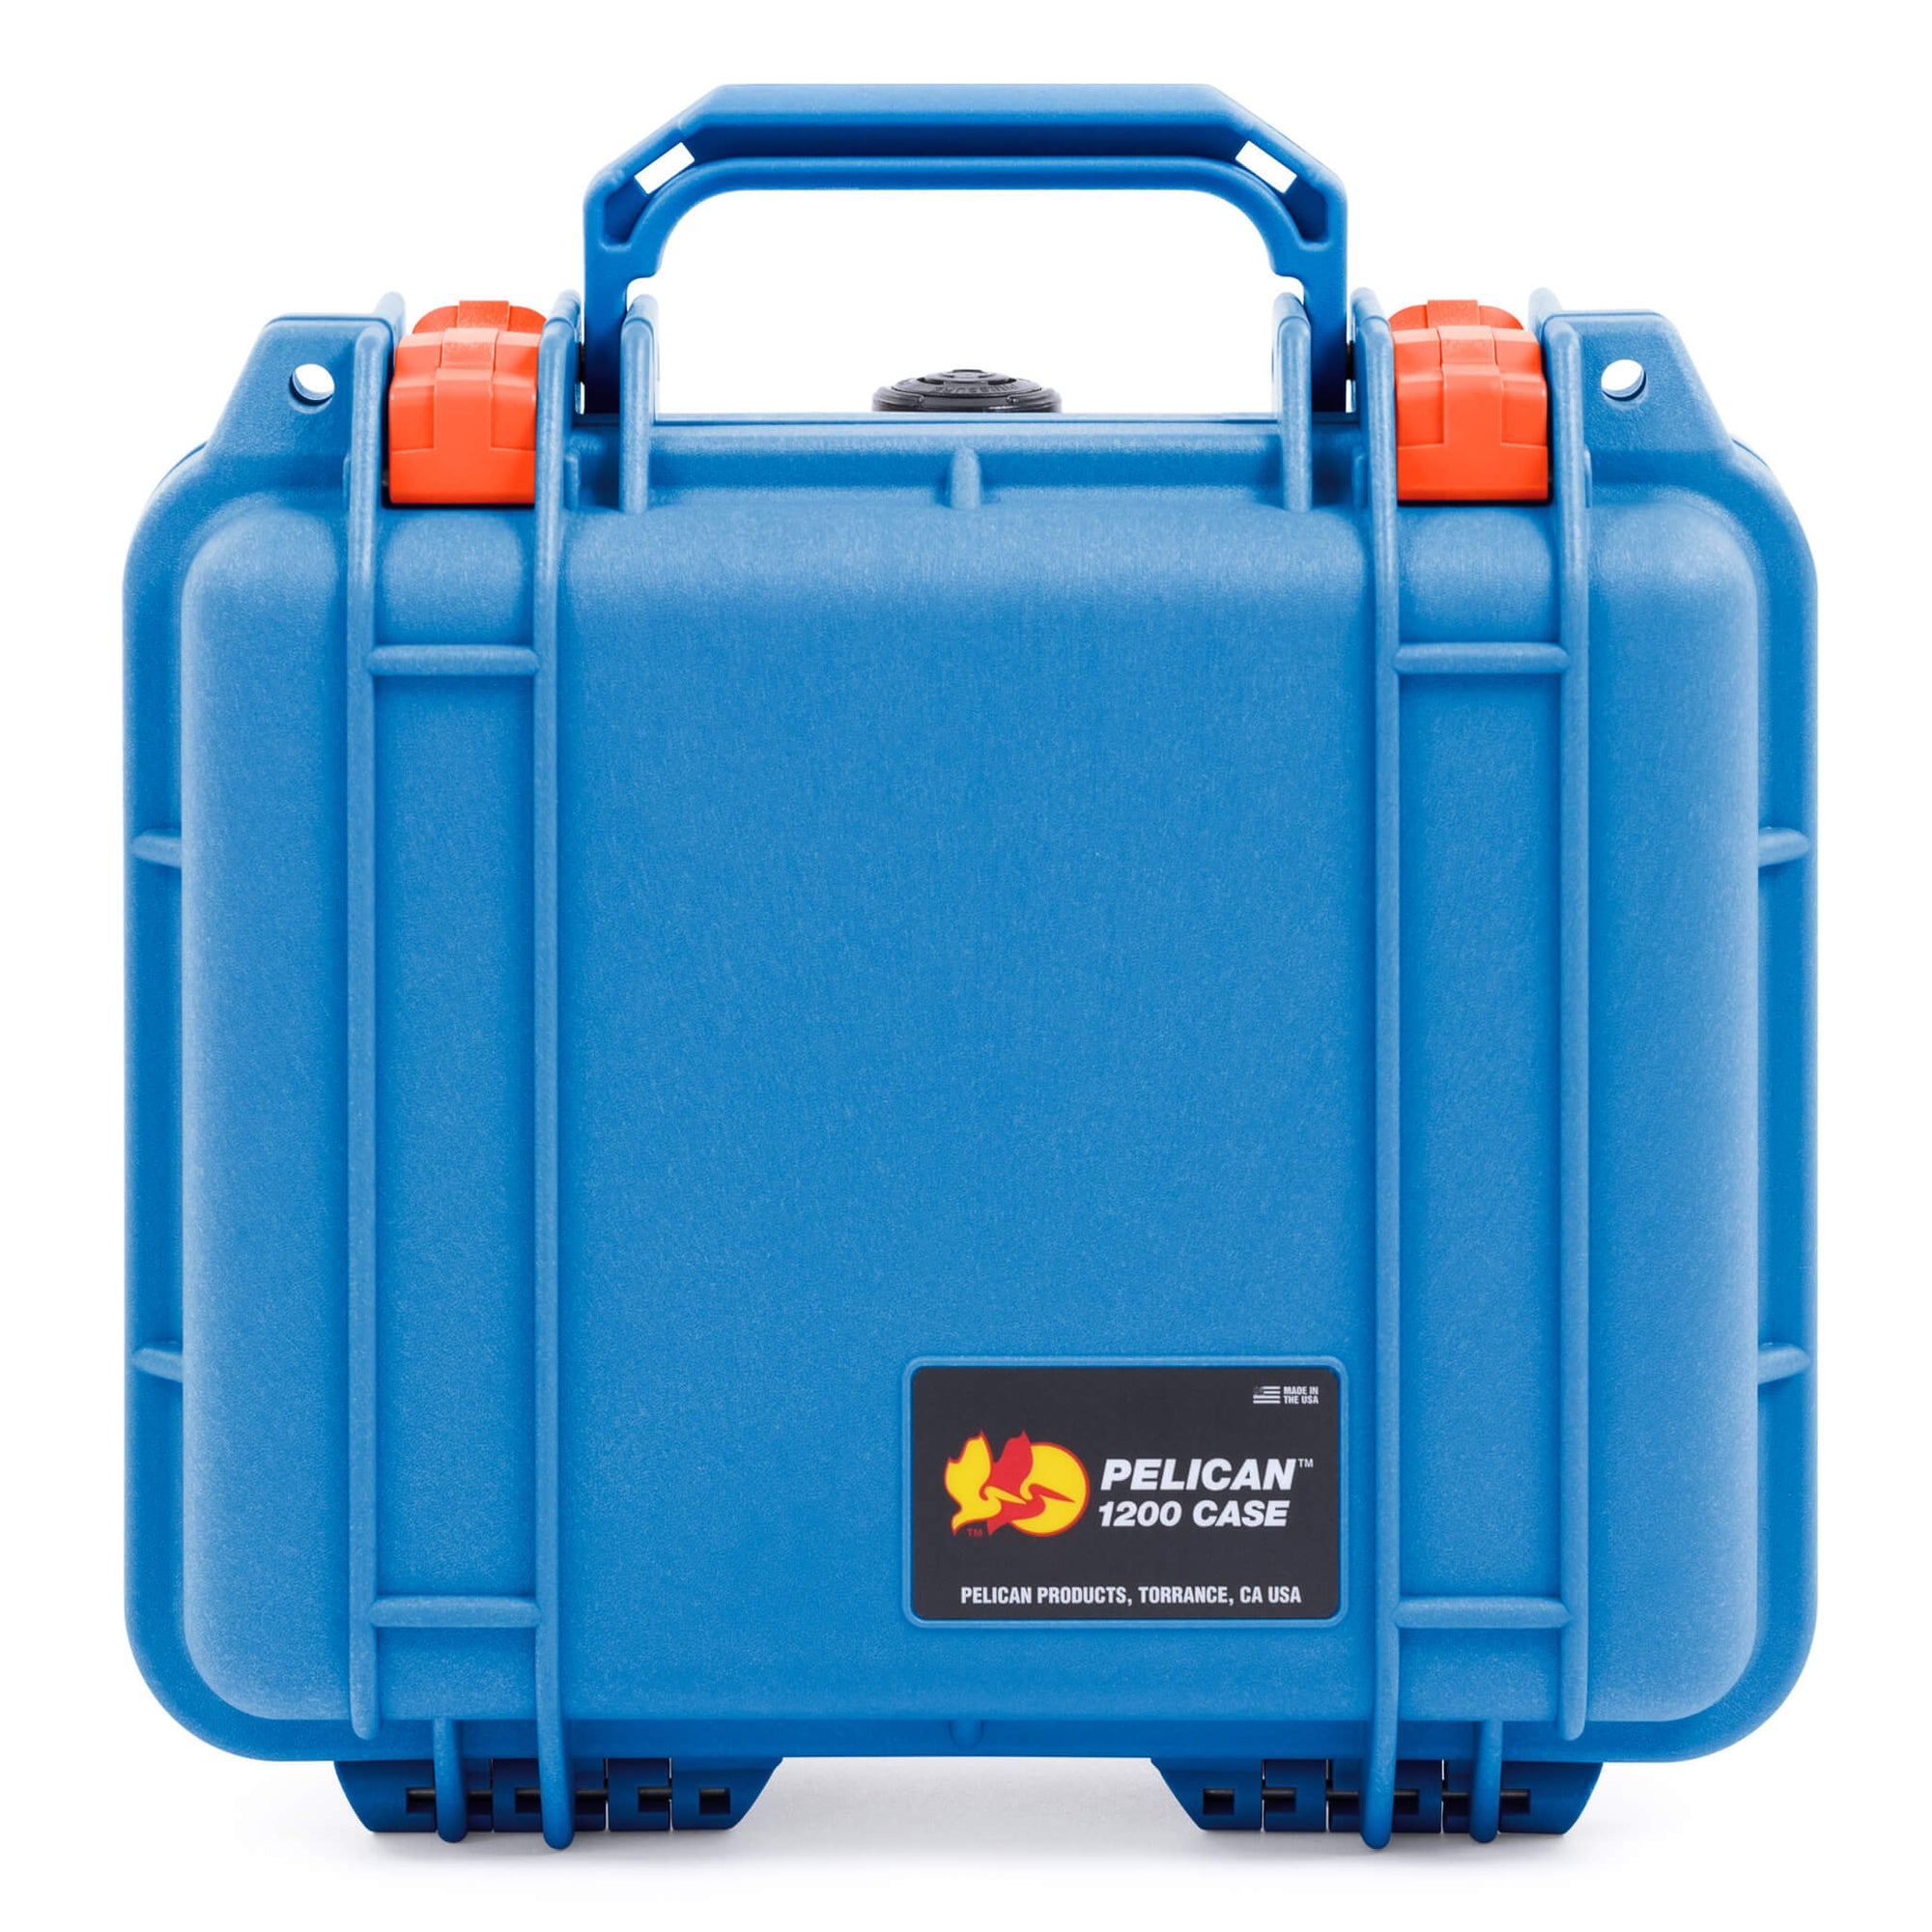 Pelican 1200 Case, Blue with Orange Latches ColorCase 